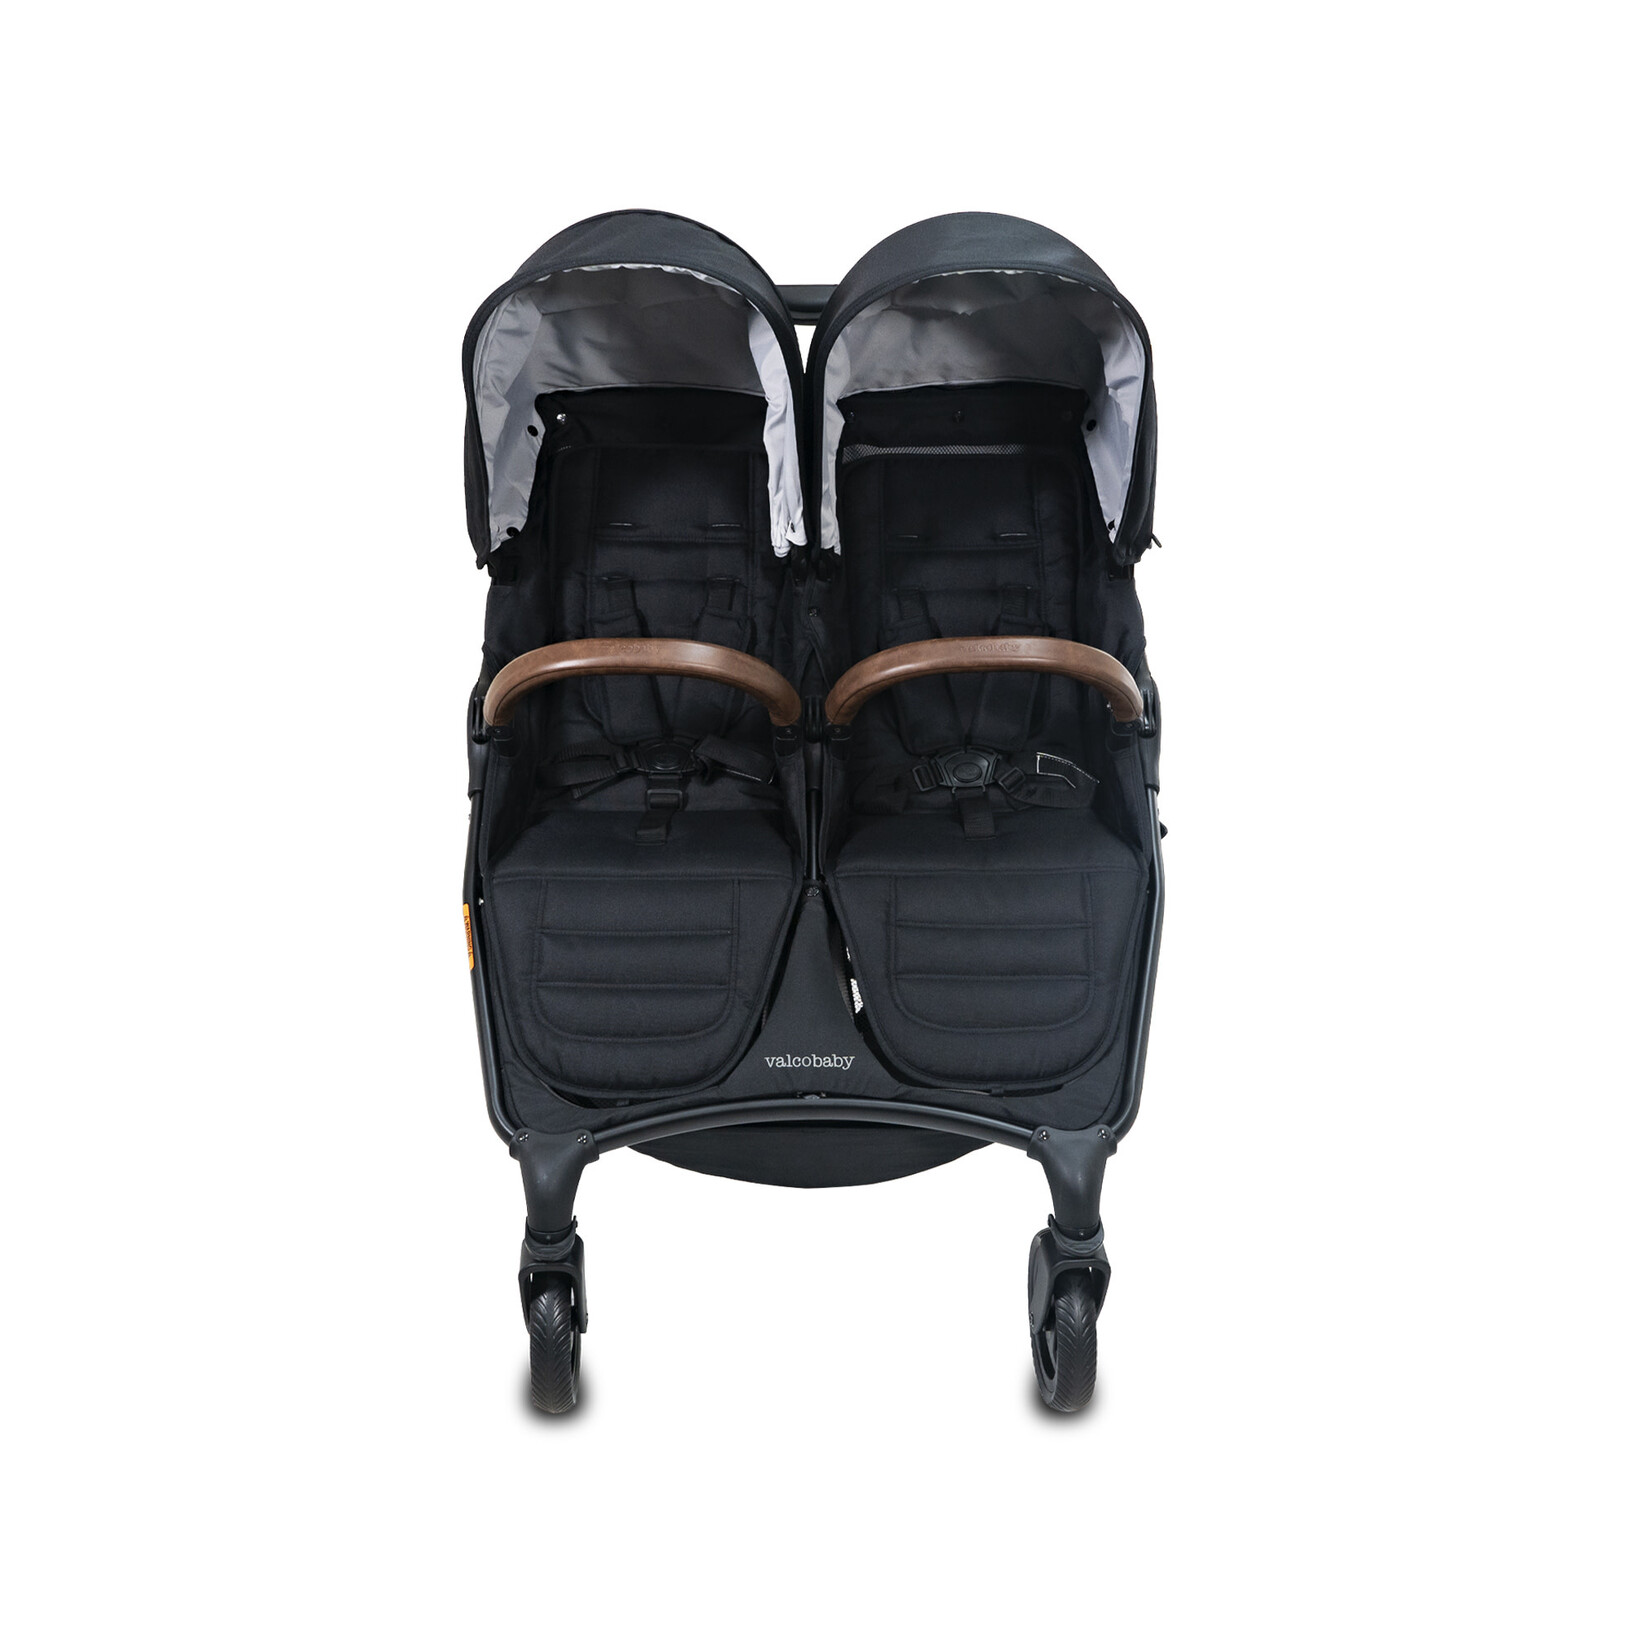 Valco Baby Trend Duo-Ash Black+Bonus Gift Total Value $114.85